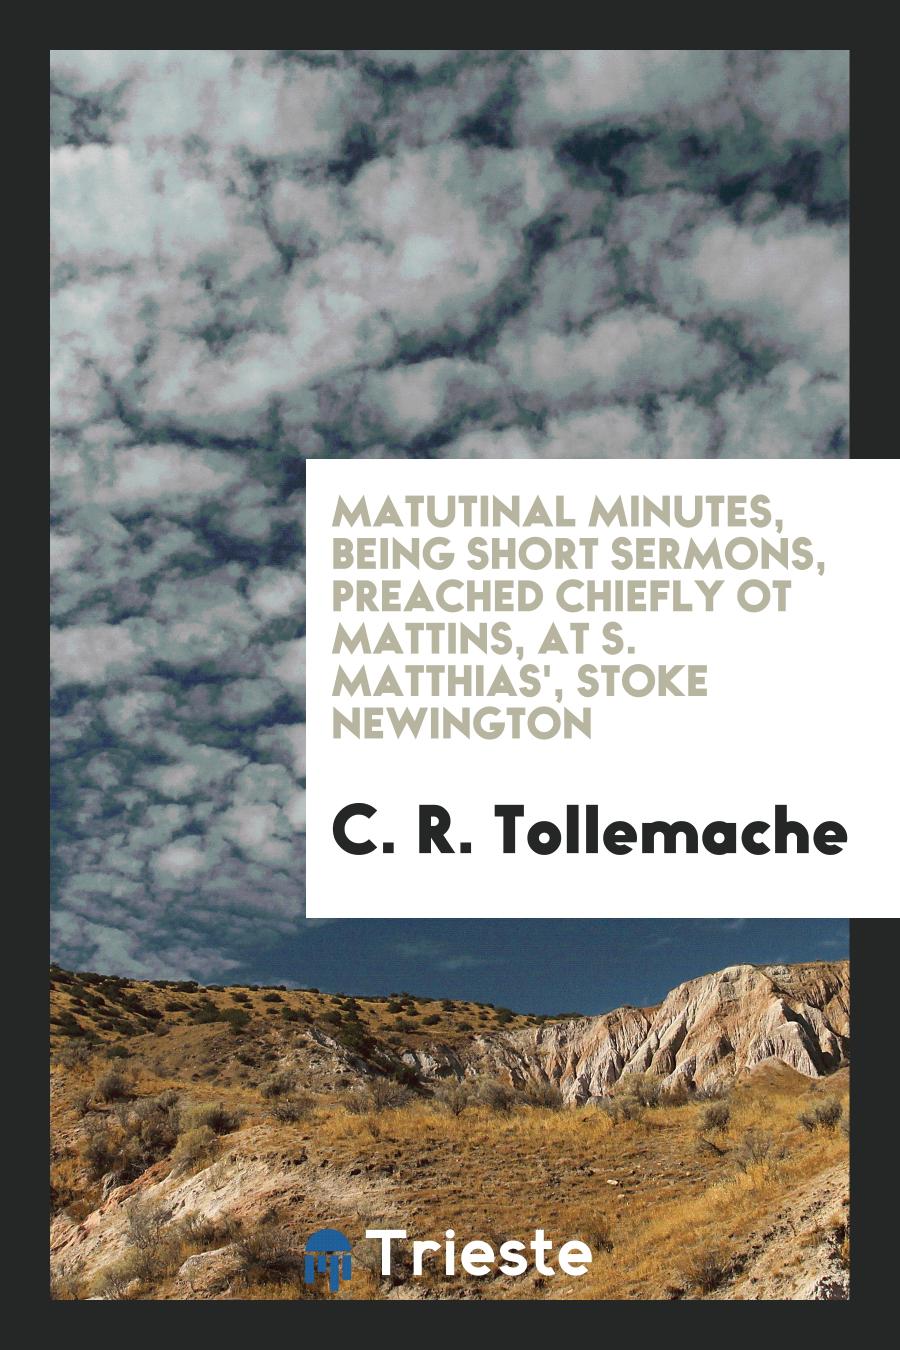 Matutinal Minutes, Being Short Sermons, Preached Chiefly ot Mattins, at S. Matthias', Stoke Newington